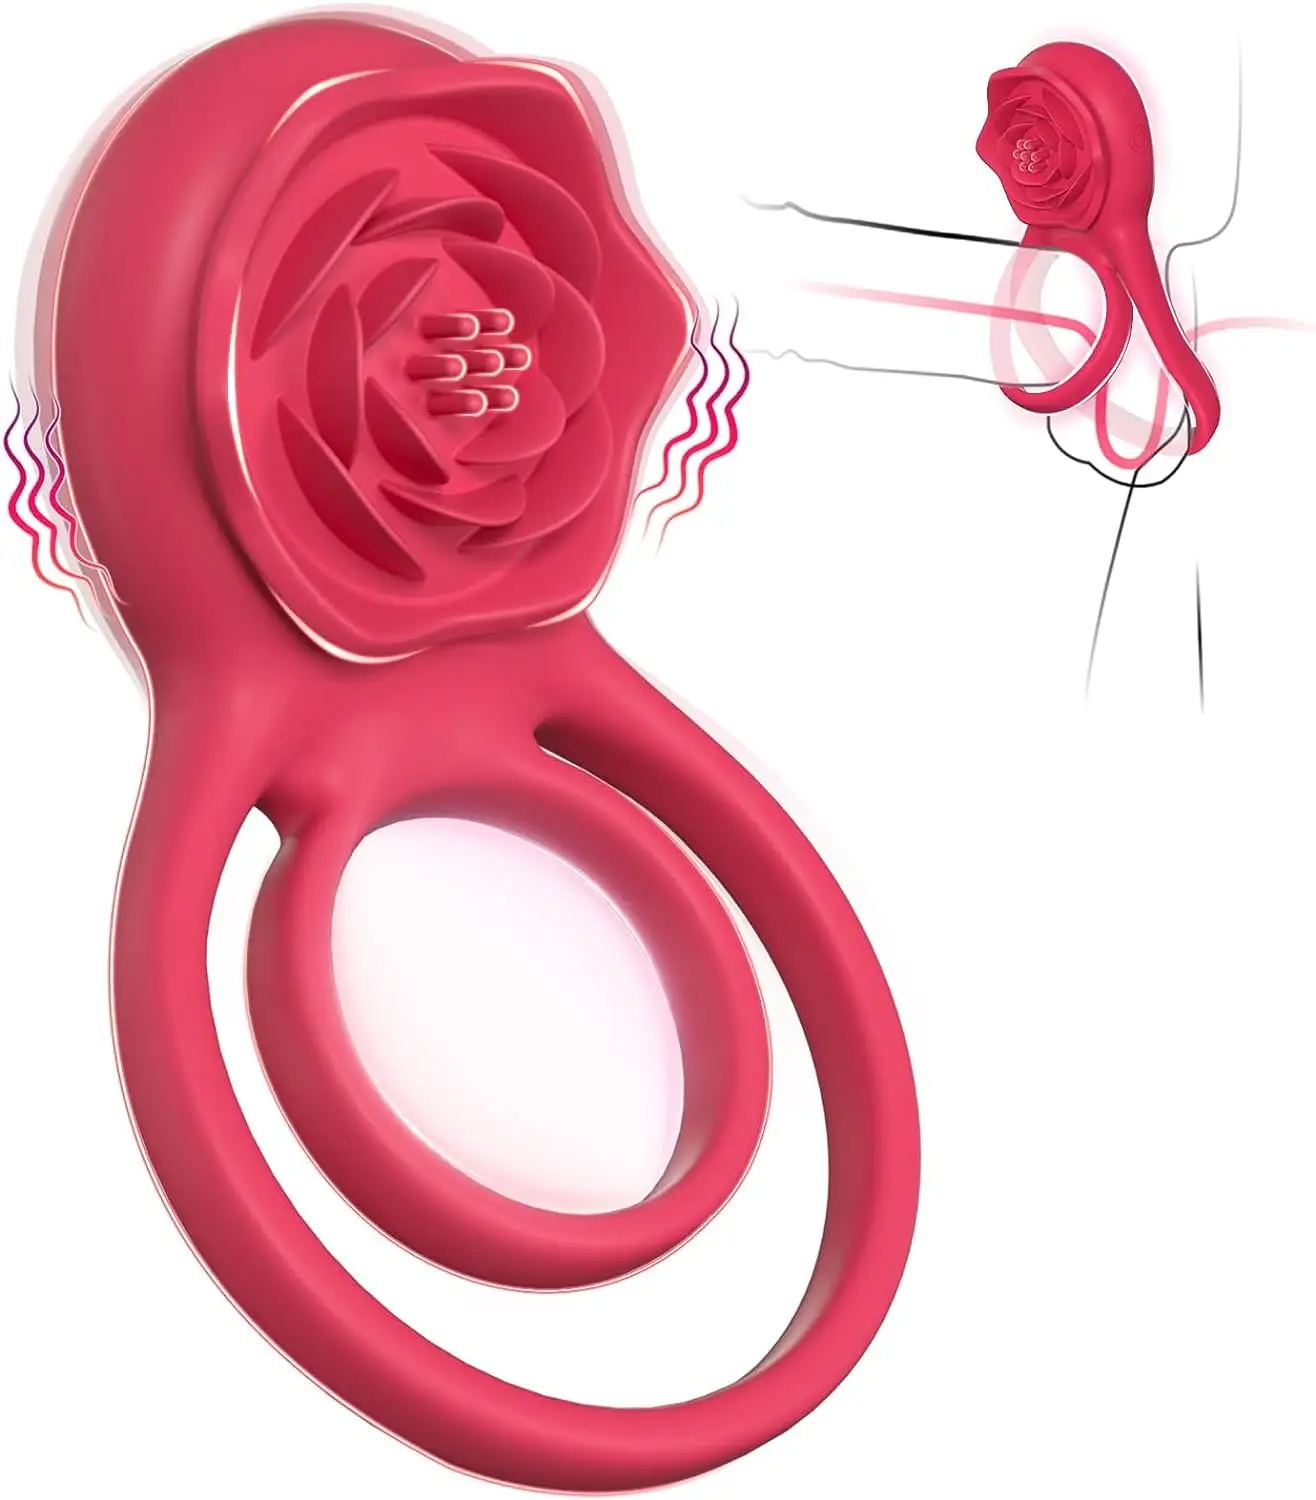 NeonislandsชายอวัยวะเพศชายแหวนนวดVibratorคู่ของเล่นG Spot Vibrating CockแหวนRose Stimulator Clitoral